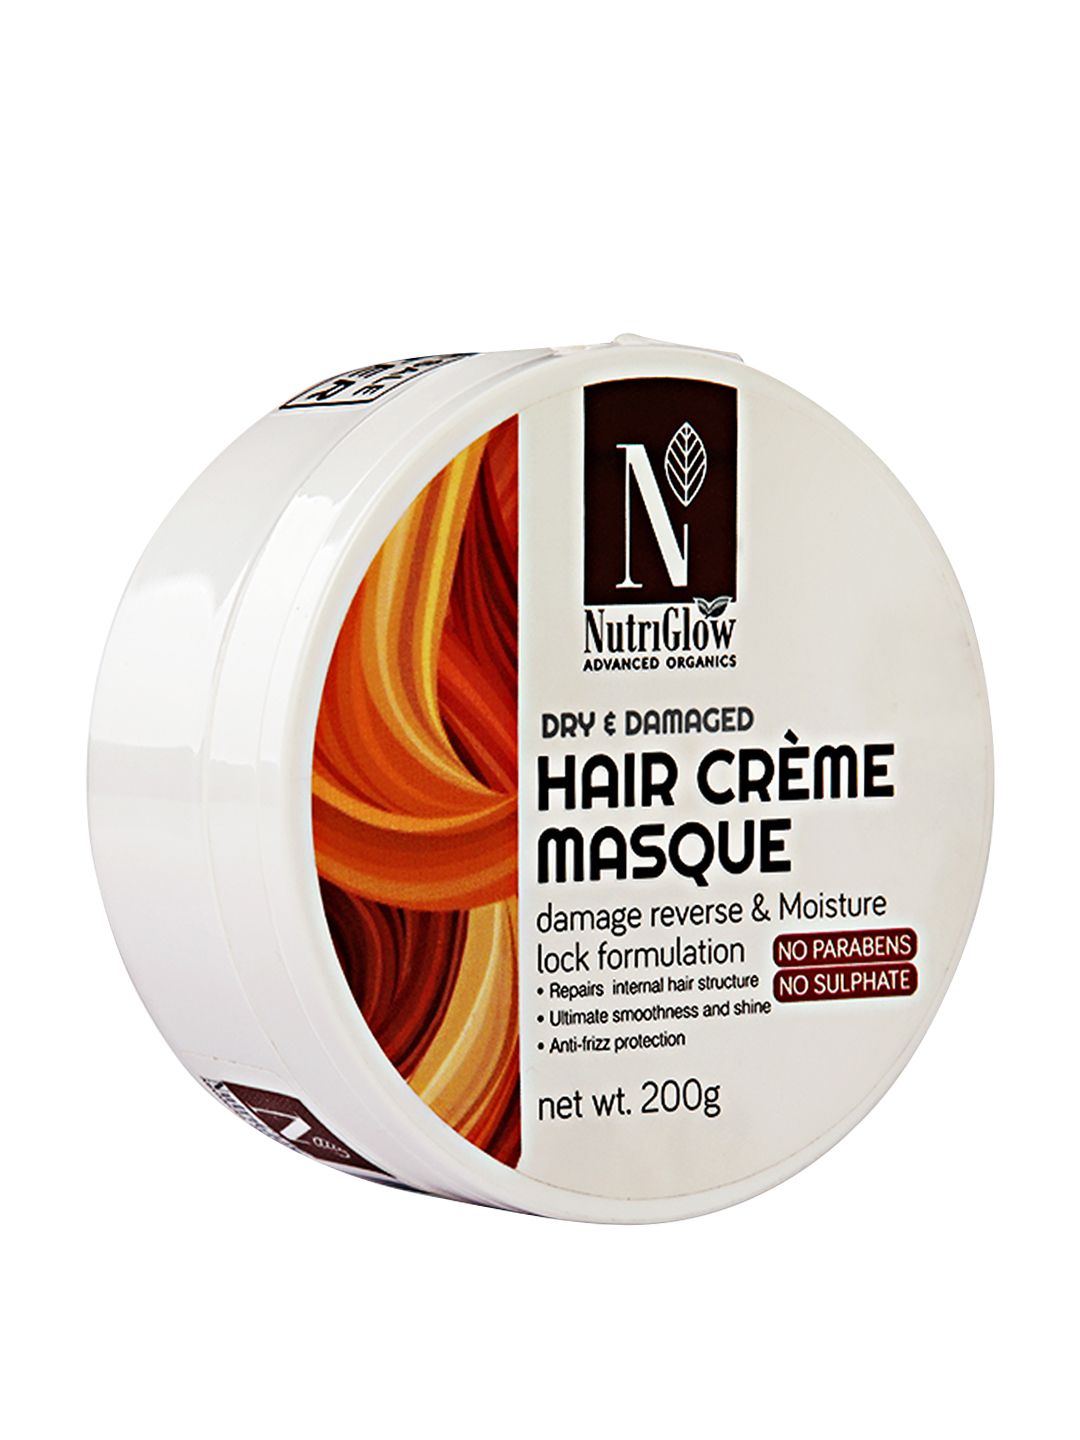 NutriGlow Advanced Organics Dry & Damage Repair Hair Creme Masque 200 g Price in India